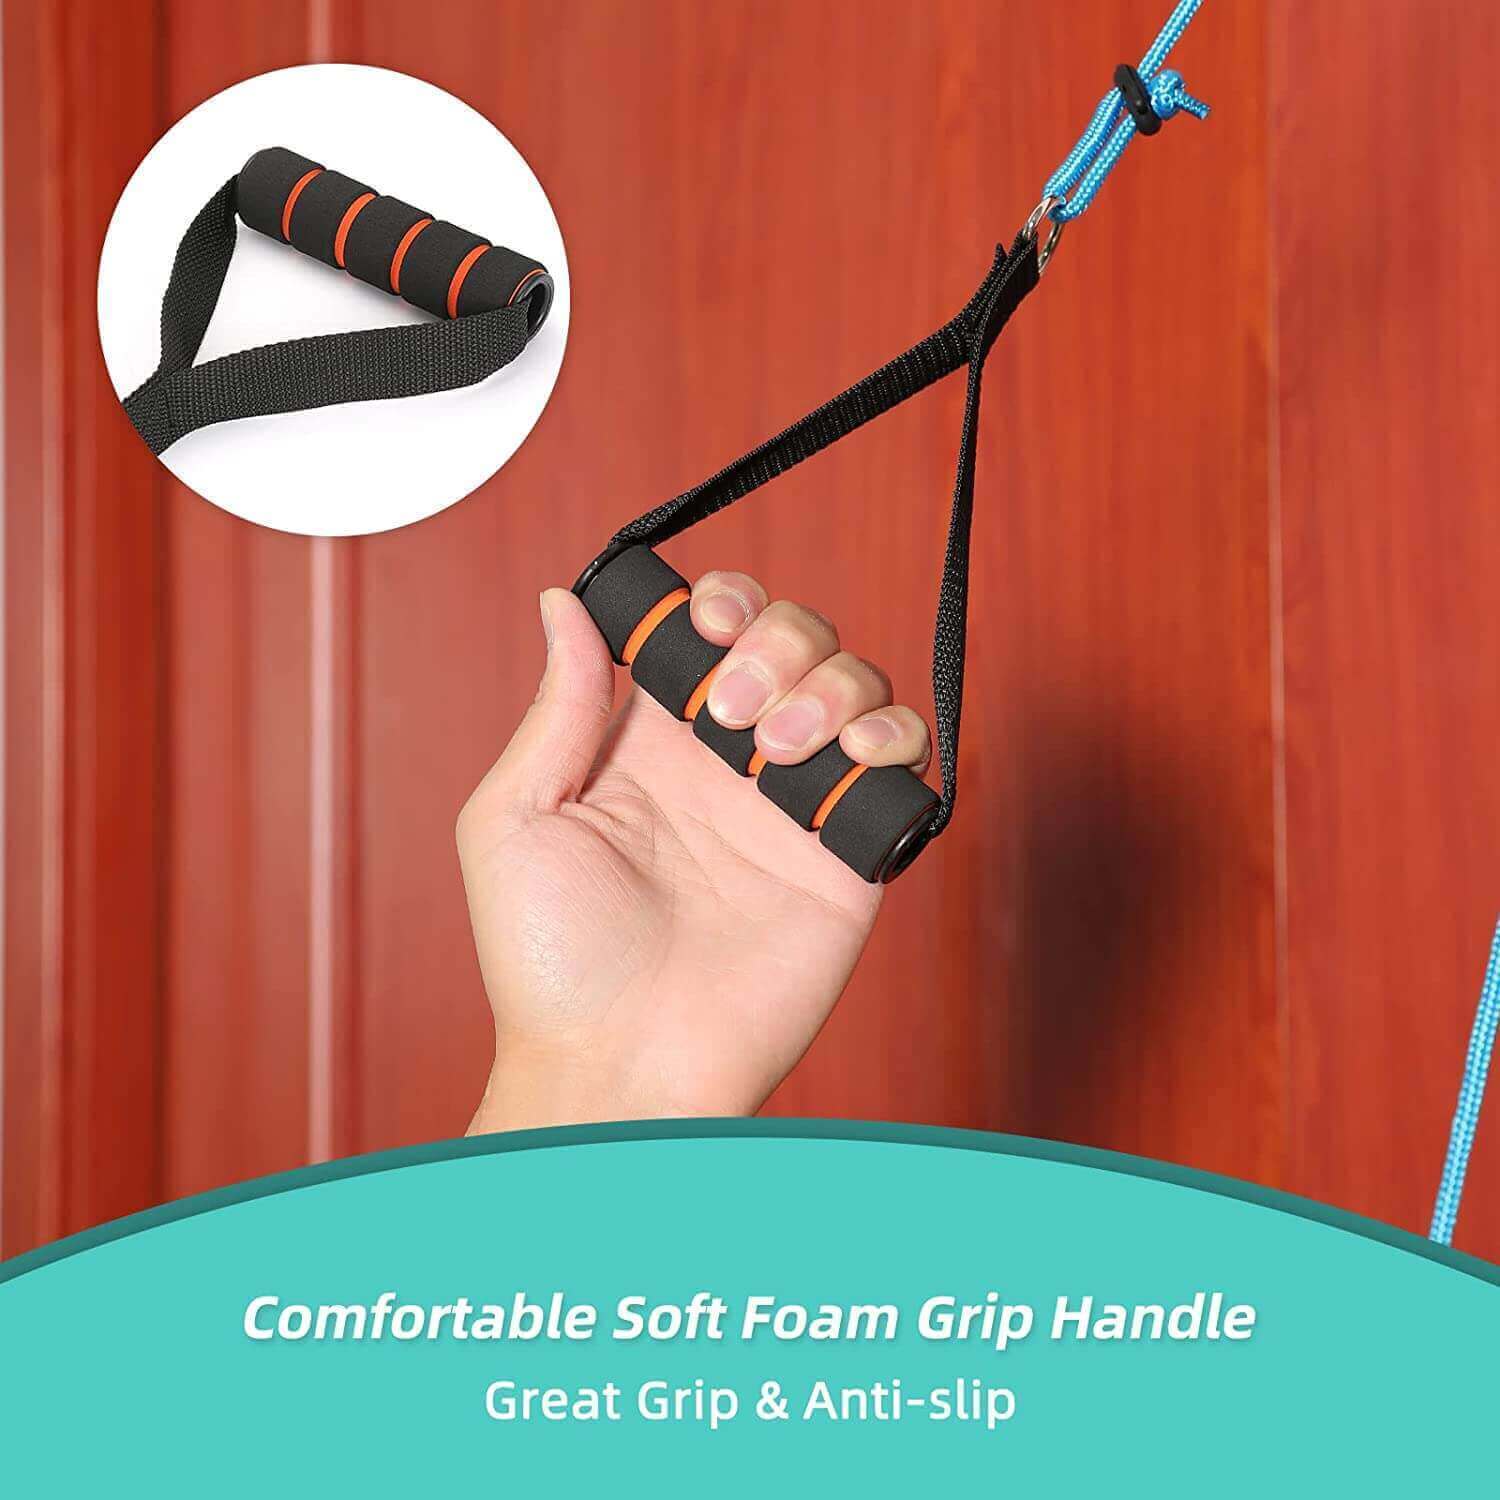 Fanwer Shoulder Pulley for Rotator Cuff Exercises and Frozen Shoulder, grip handle